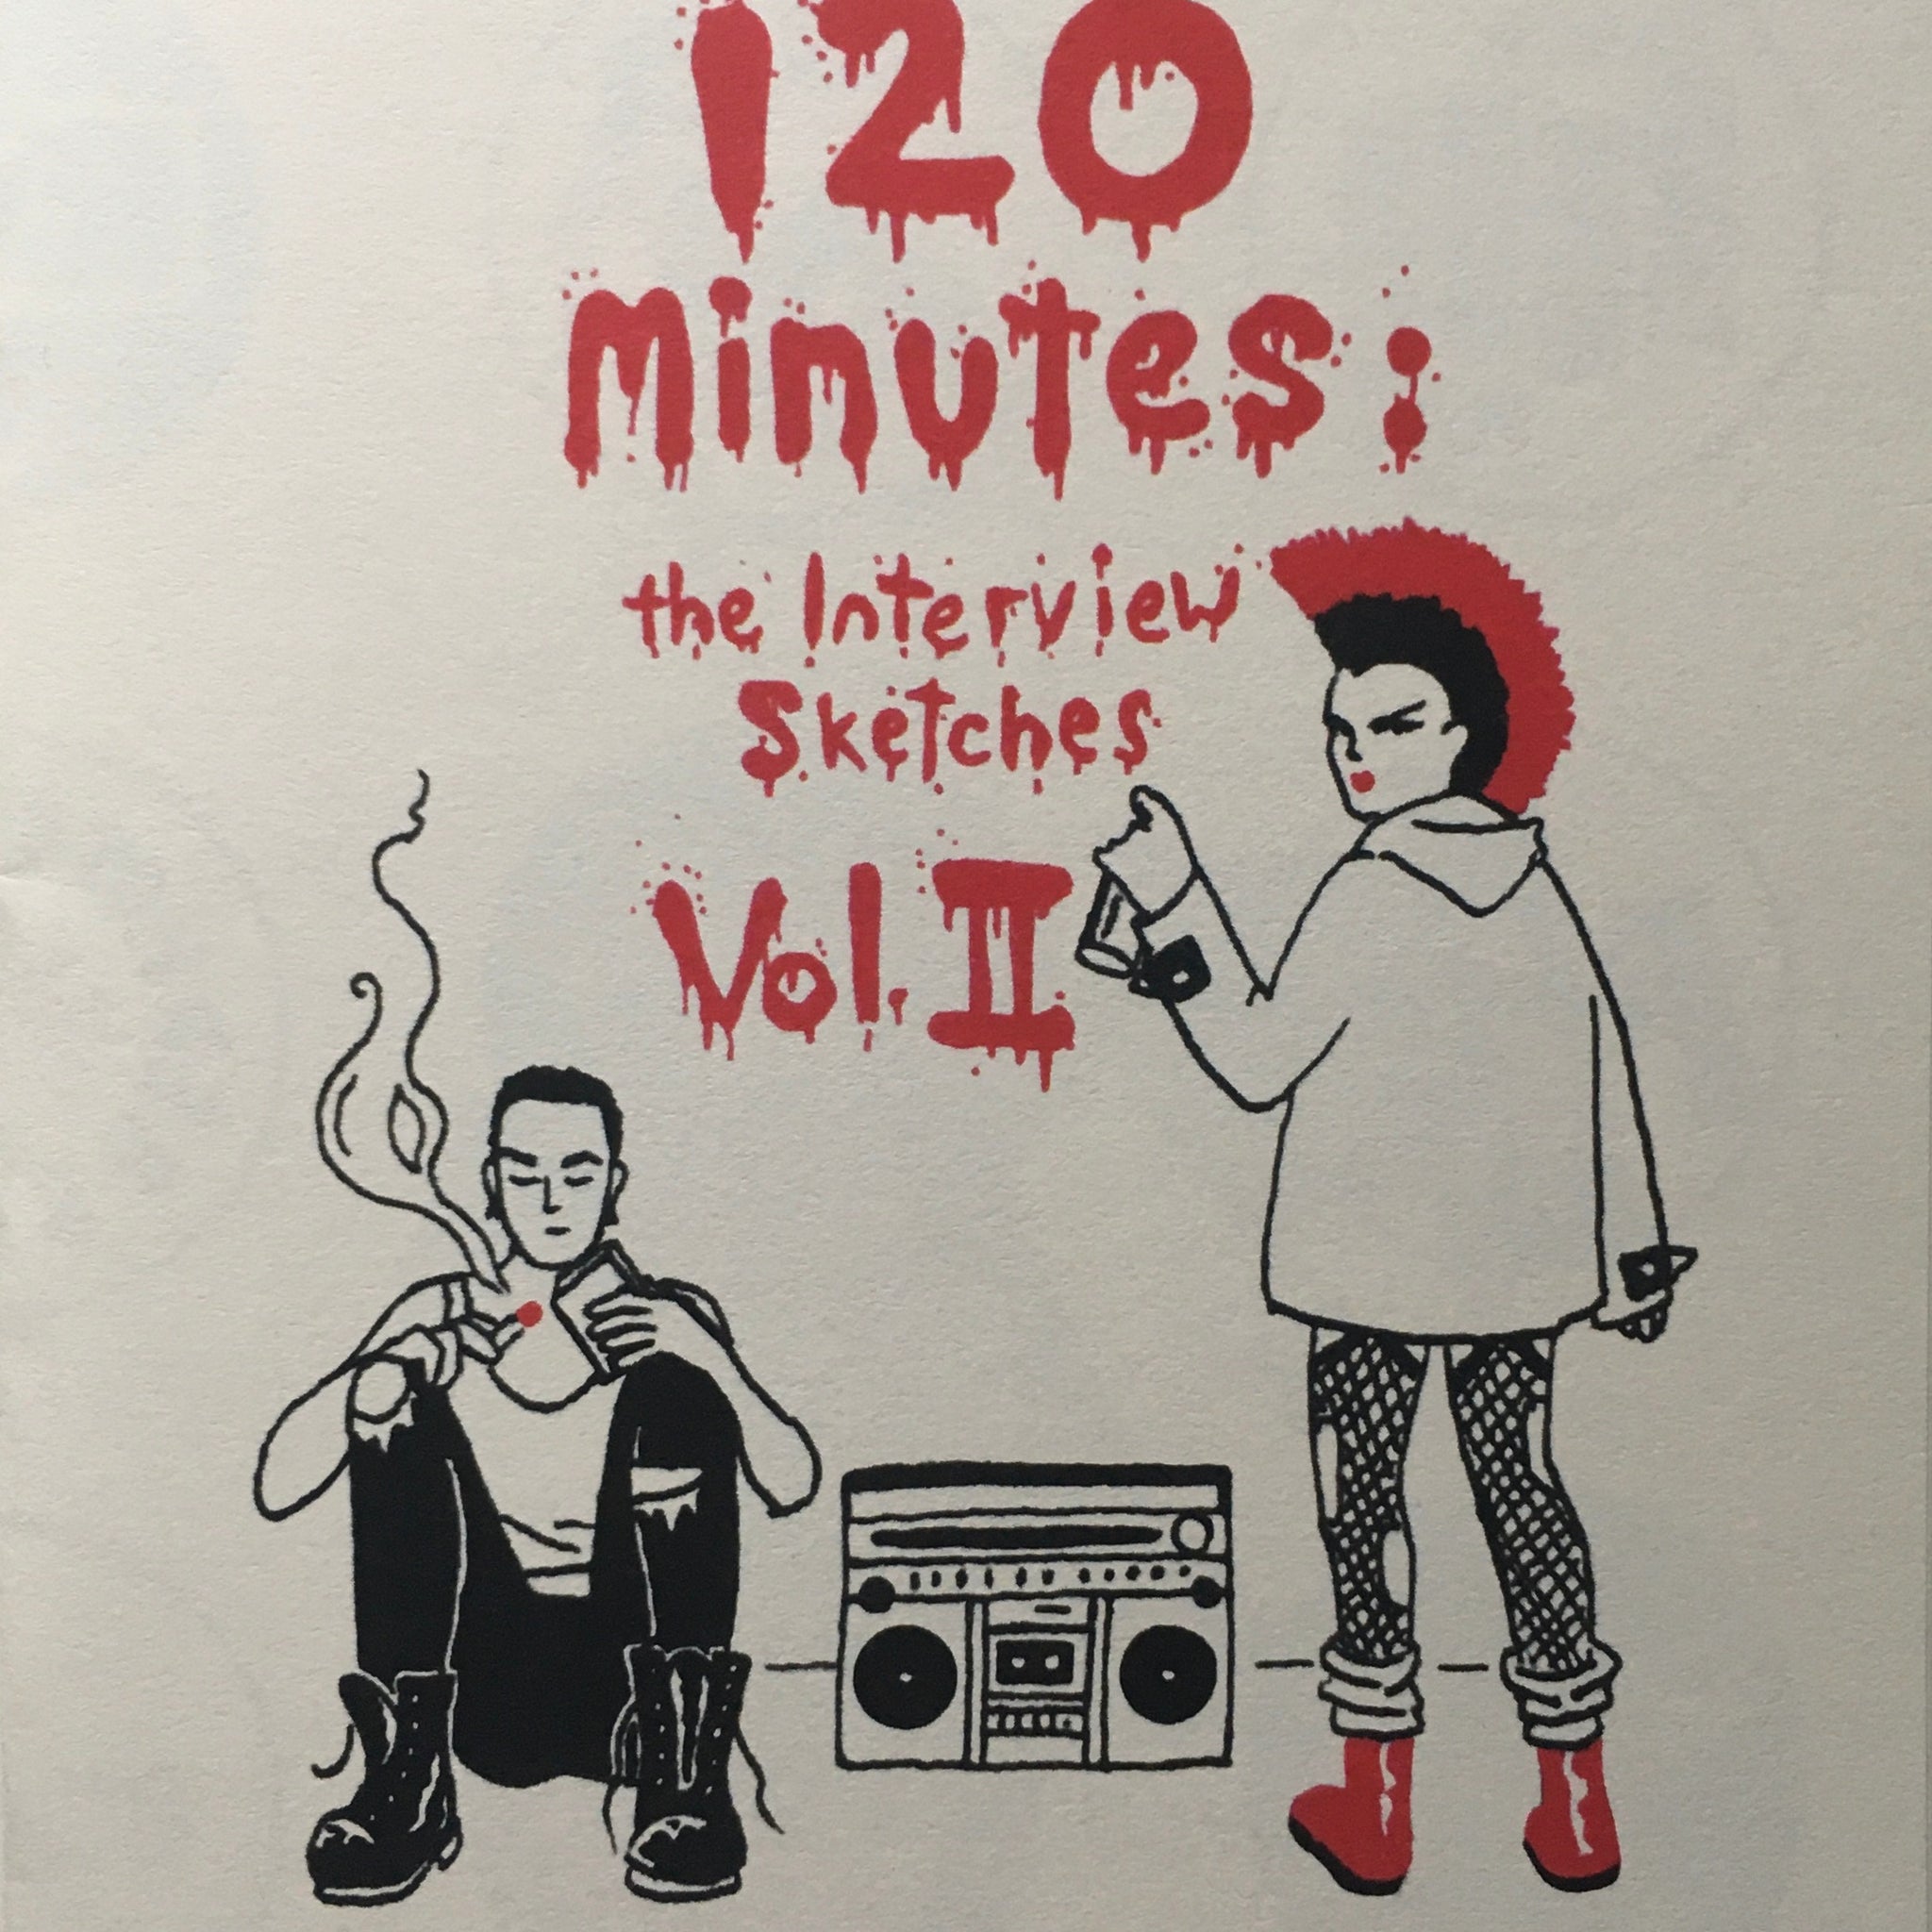 "120 Minutes: The Interview Sketches Vol. II" by Derek Marks